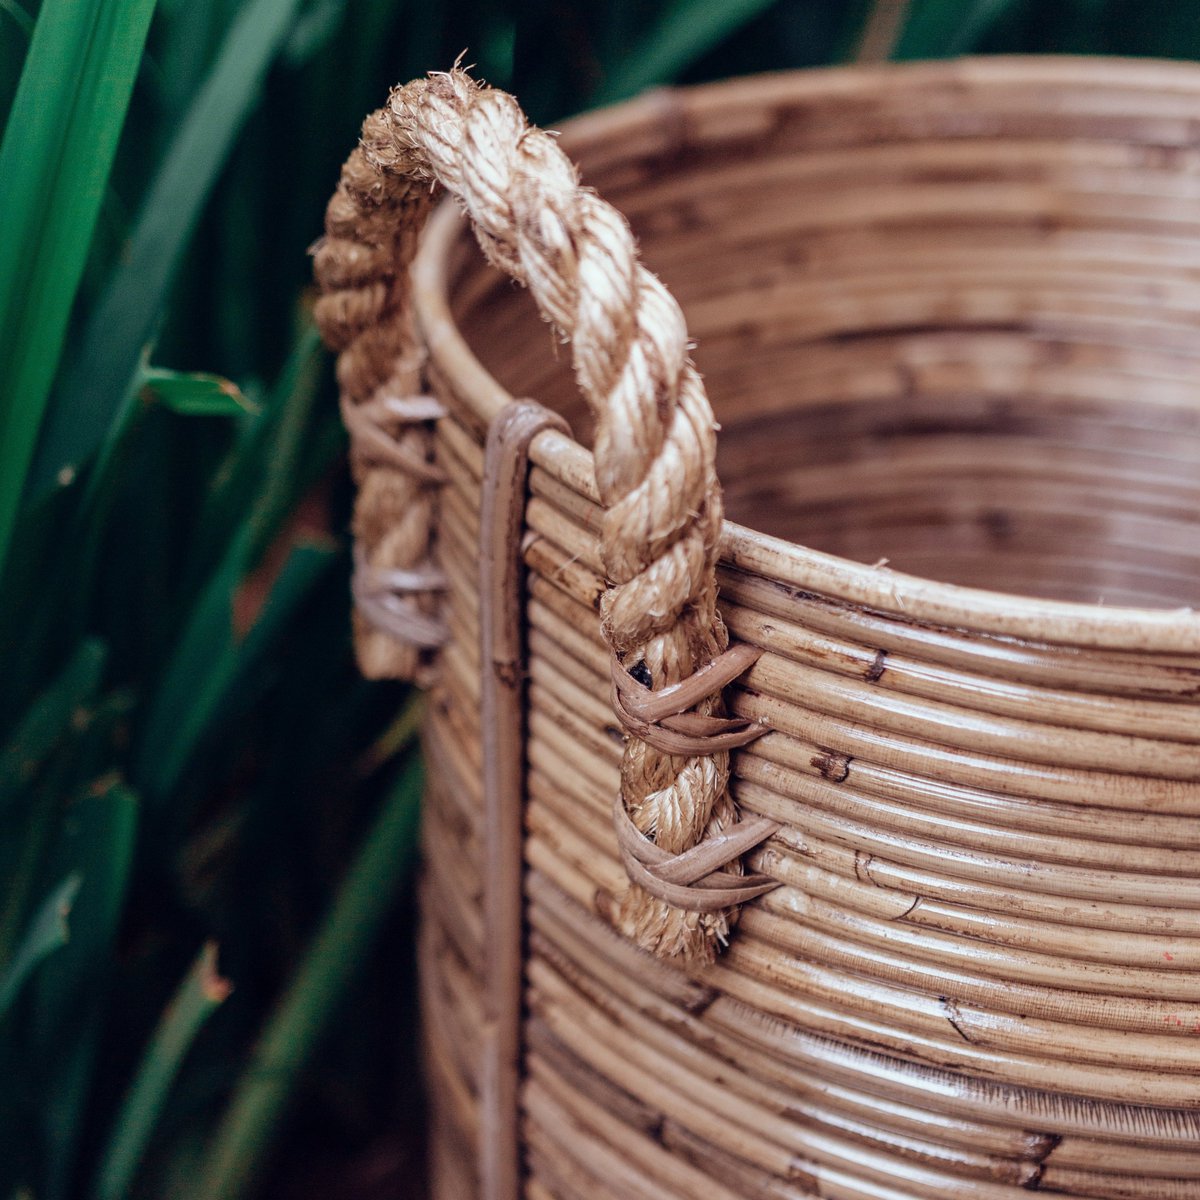 OTERE laundry basket, rattan plant basket